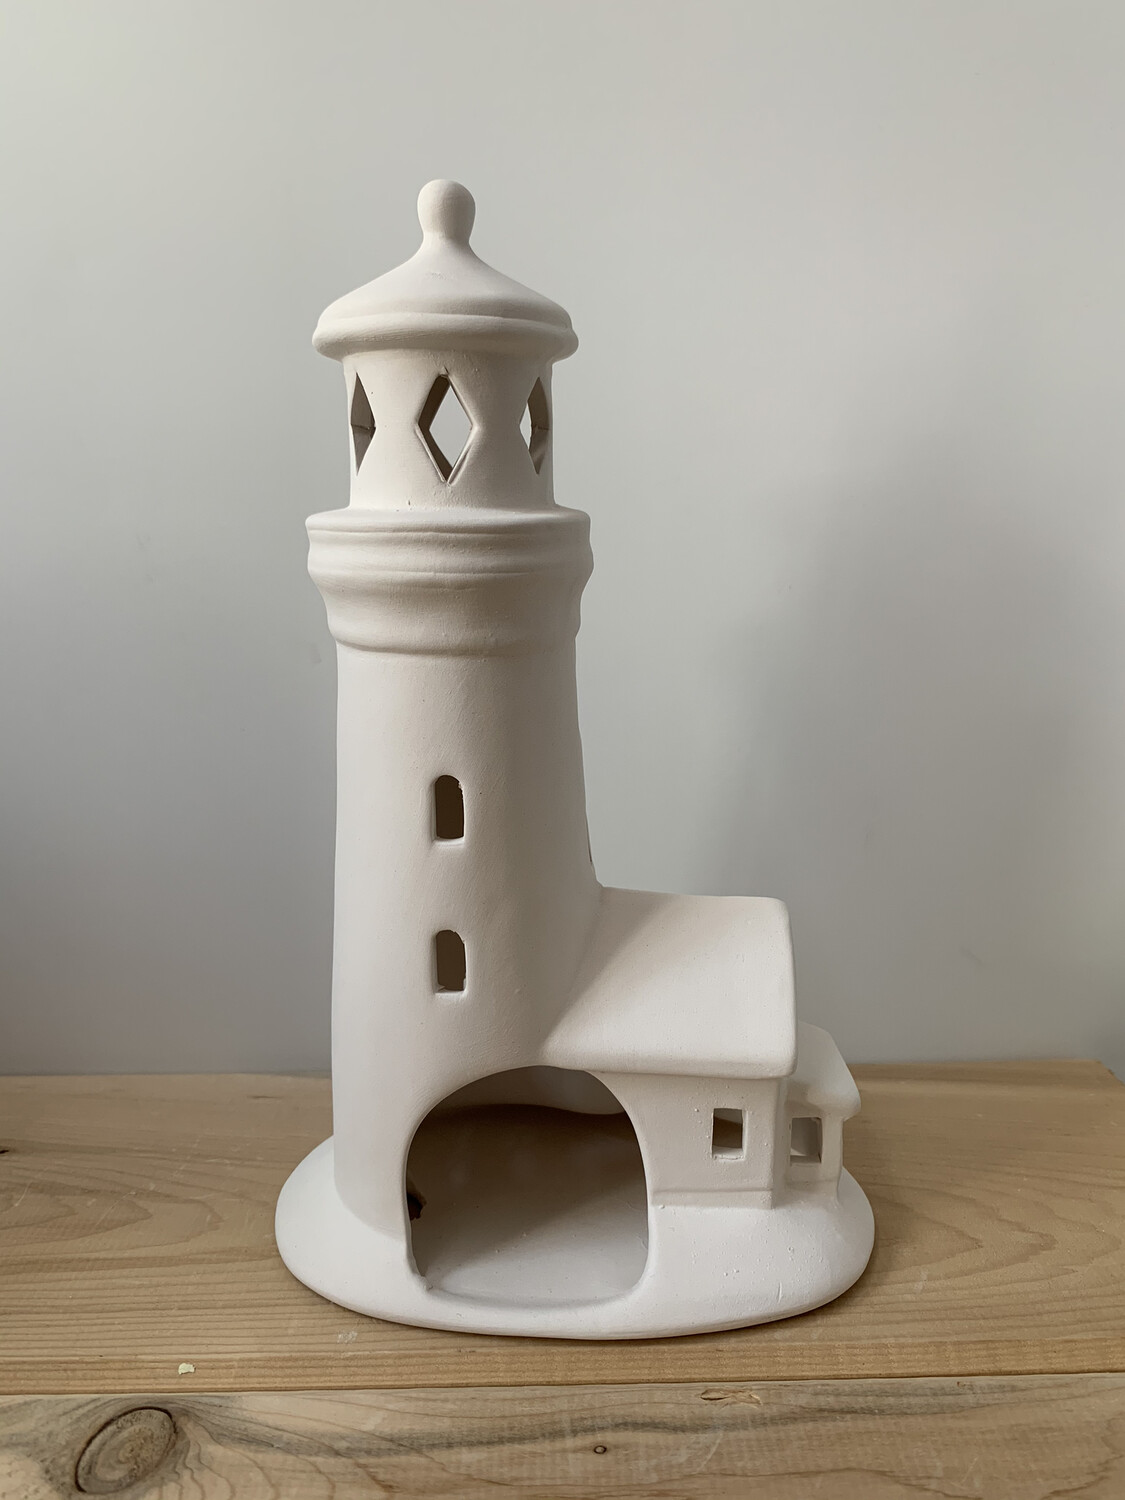 NO FIRE Paint Your Own Pottery Kit -
Ceramic Lighthouse Luminary Lantern Acrylic Painting Kit